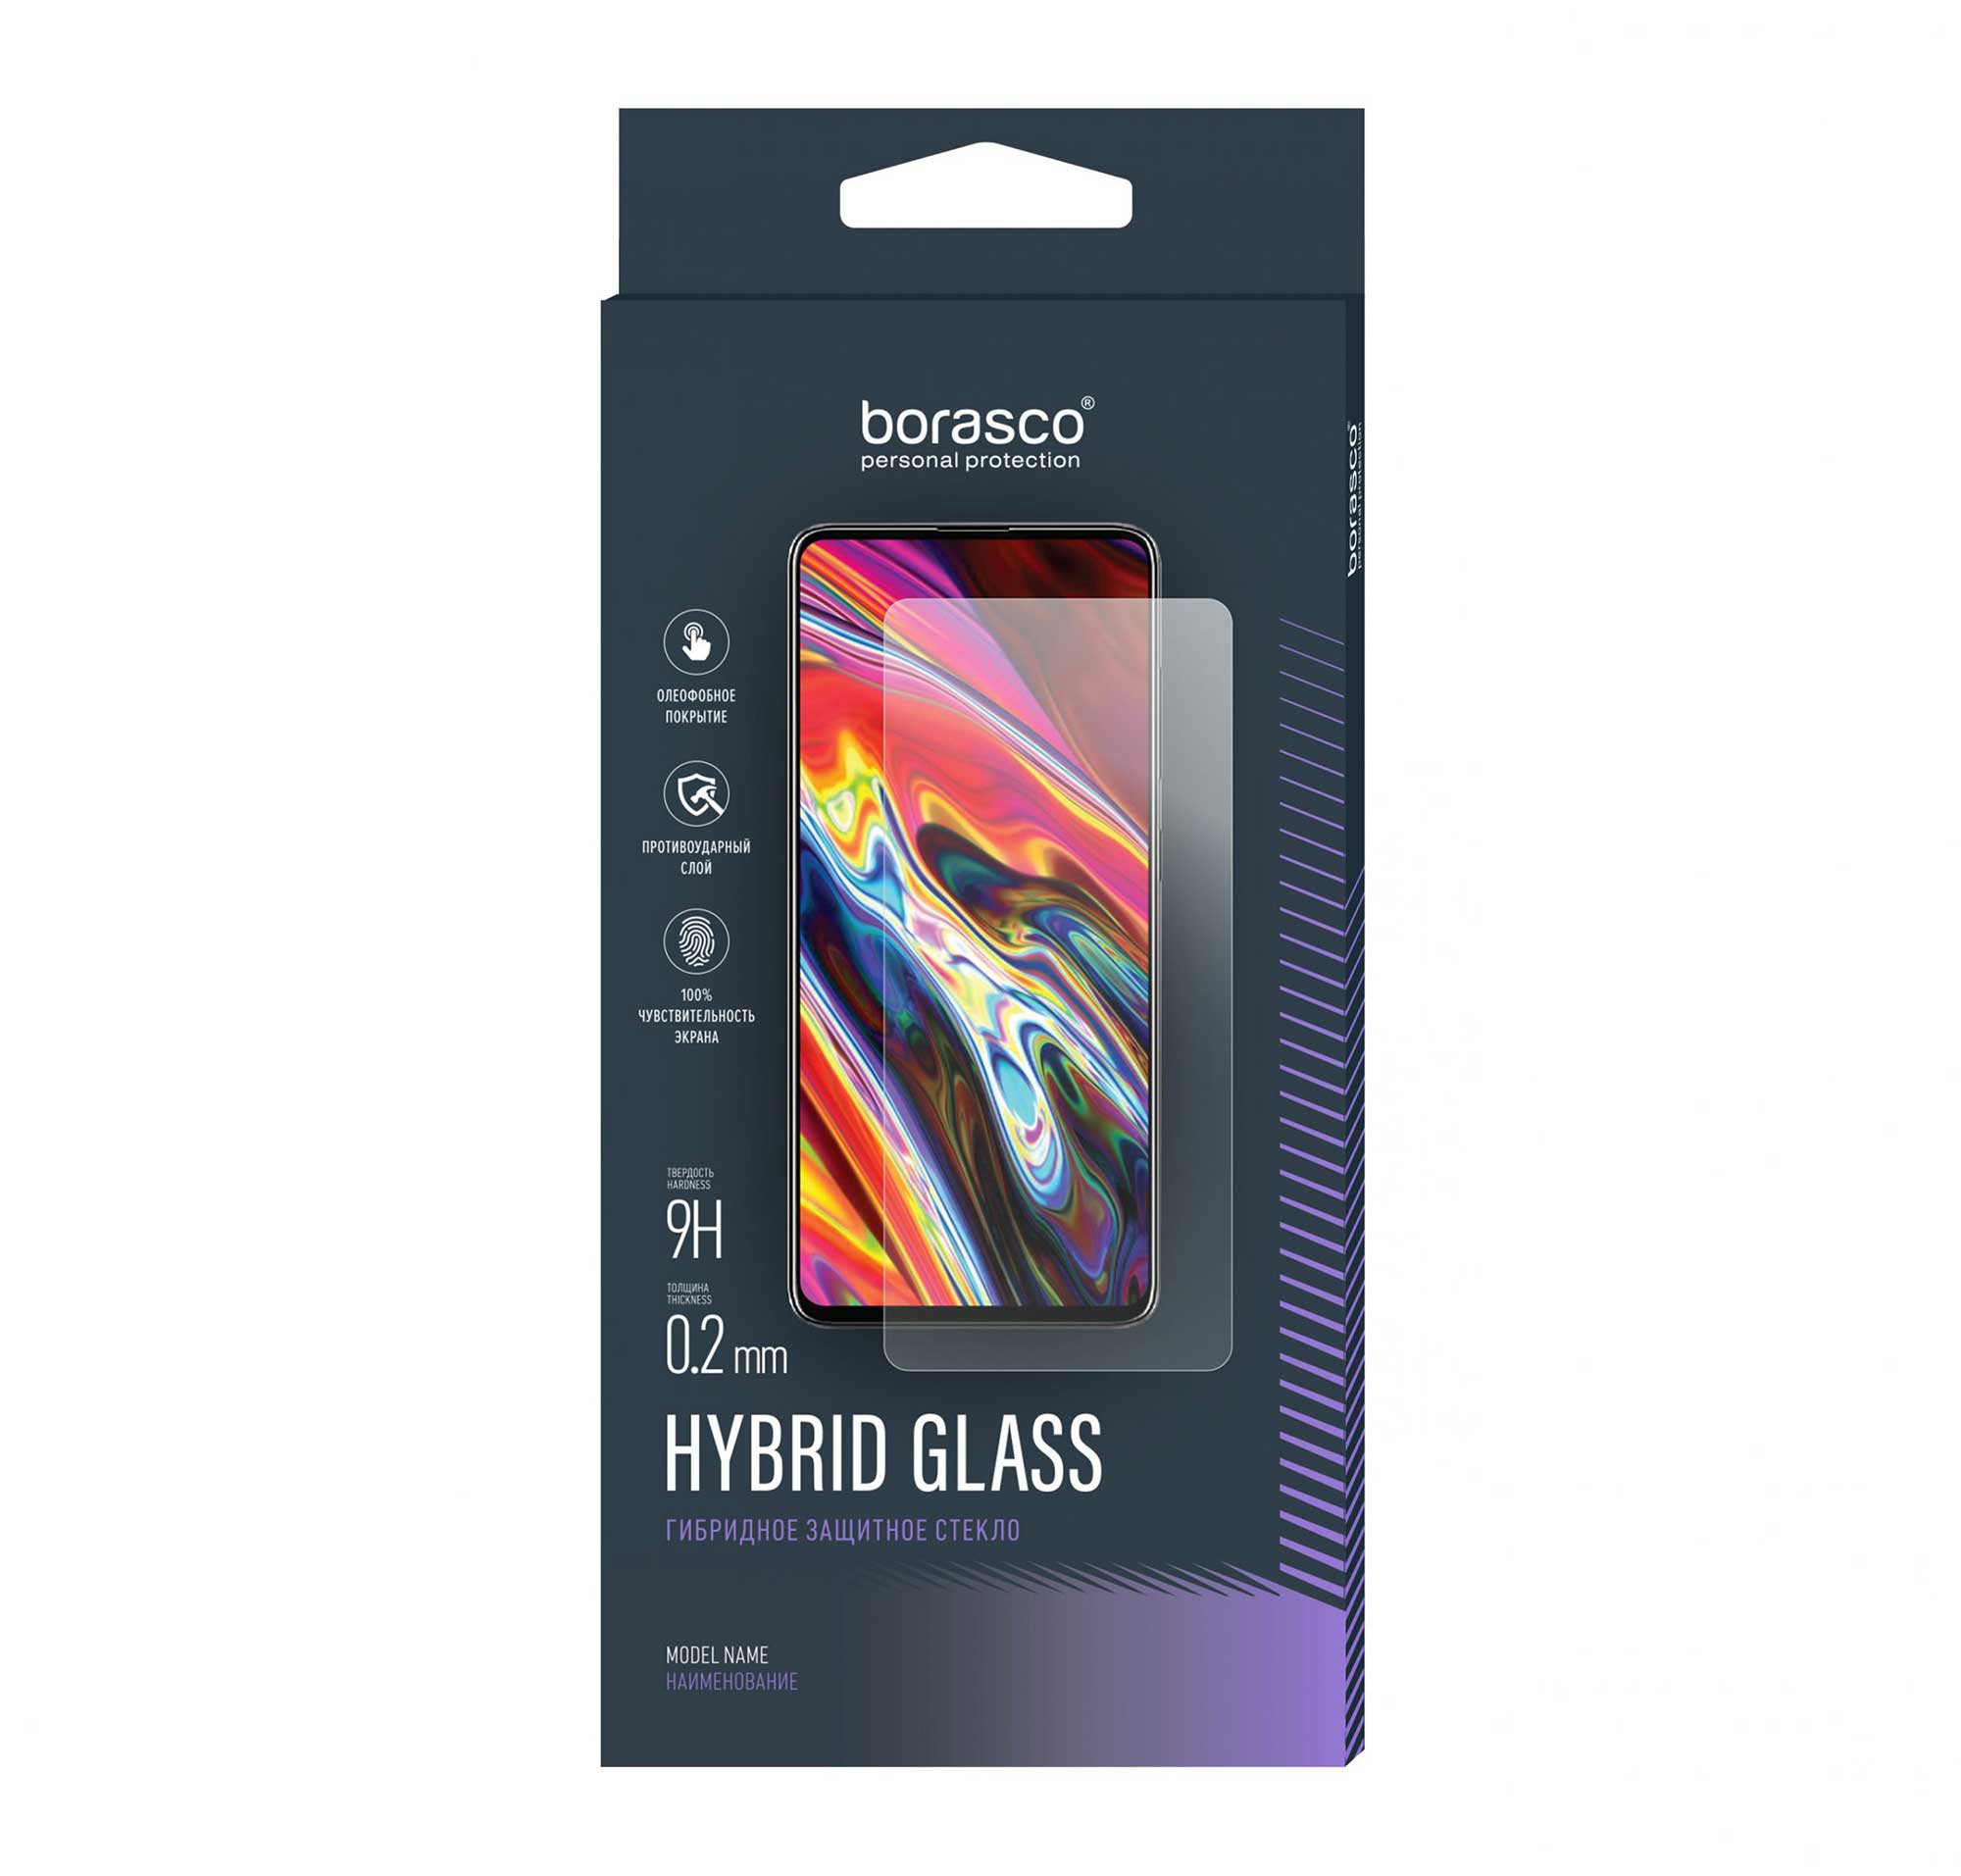 Защитное стекло Hybrid Glass для Poco X3 защитное стекло для realme x3 superzoom в упаковке